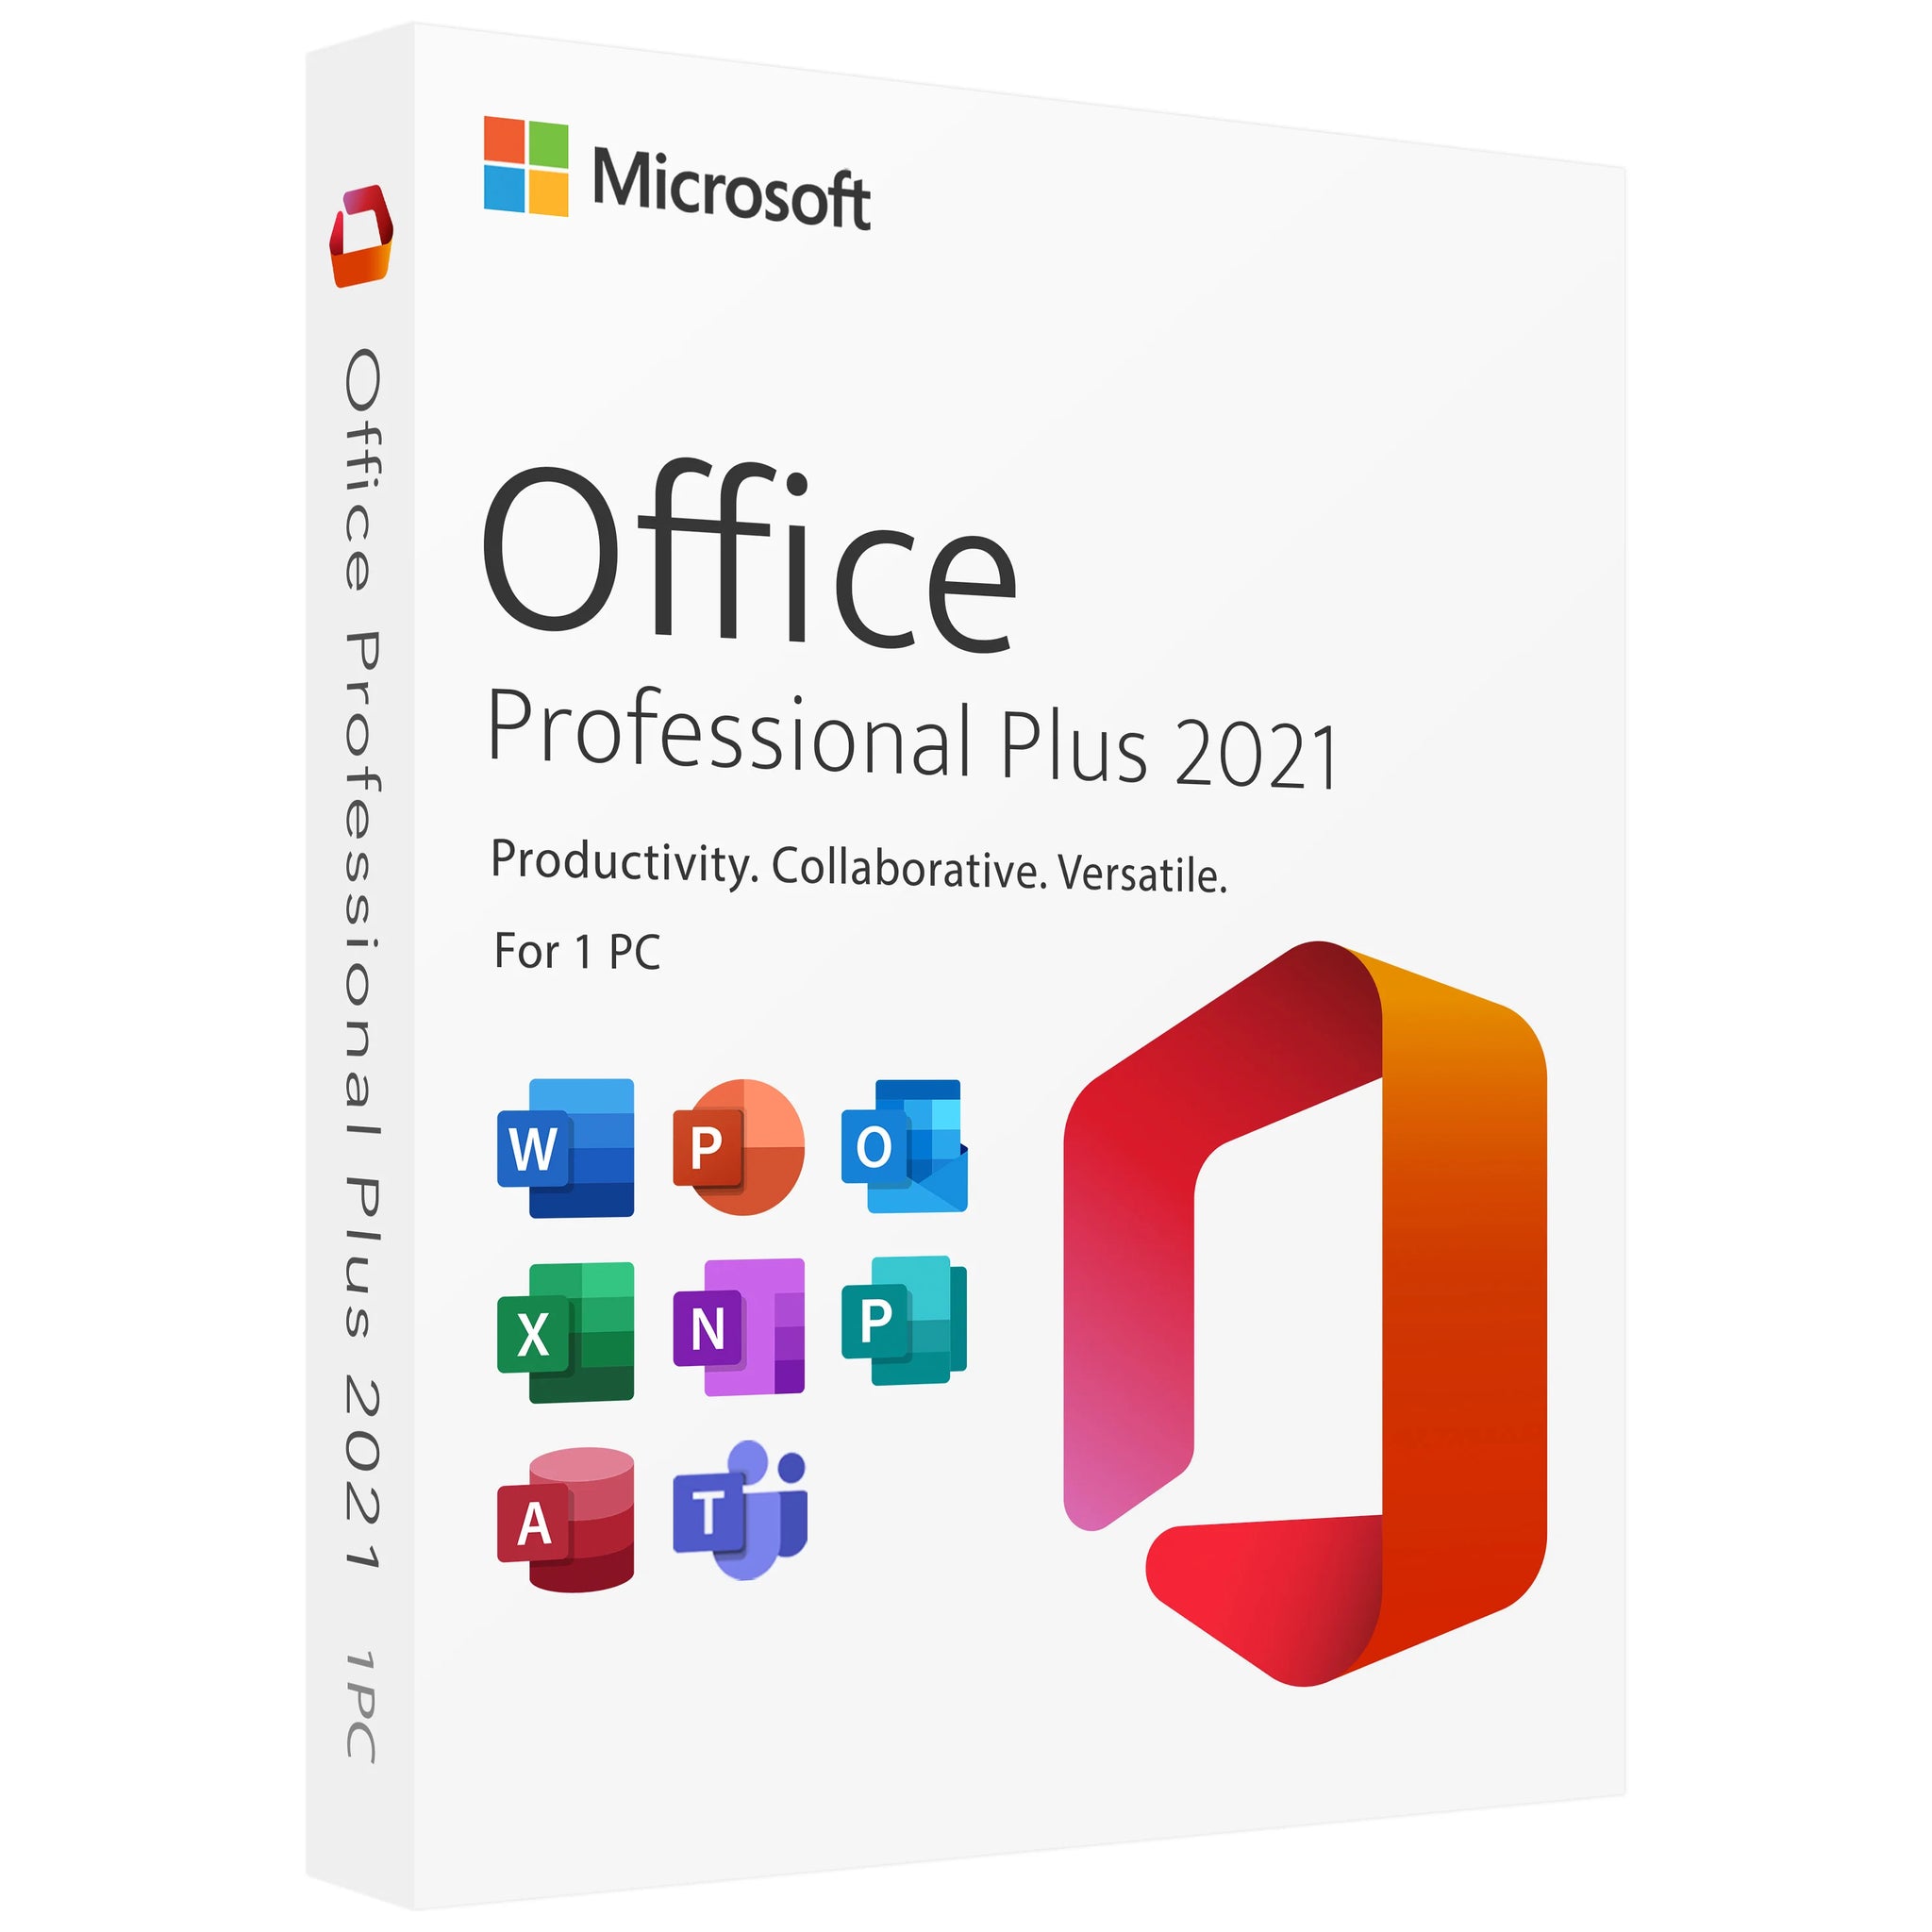 Microsoft Office 2021 Professional Plus - Lifetime License Key for 1 PC